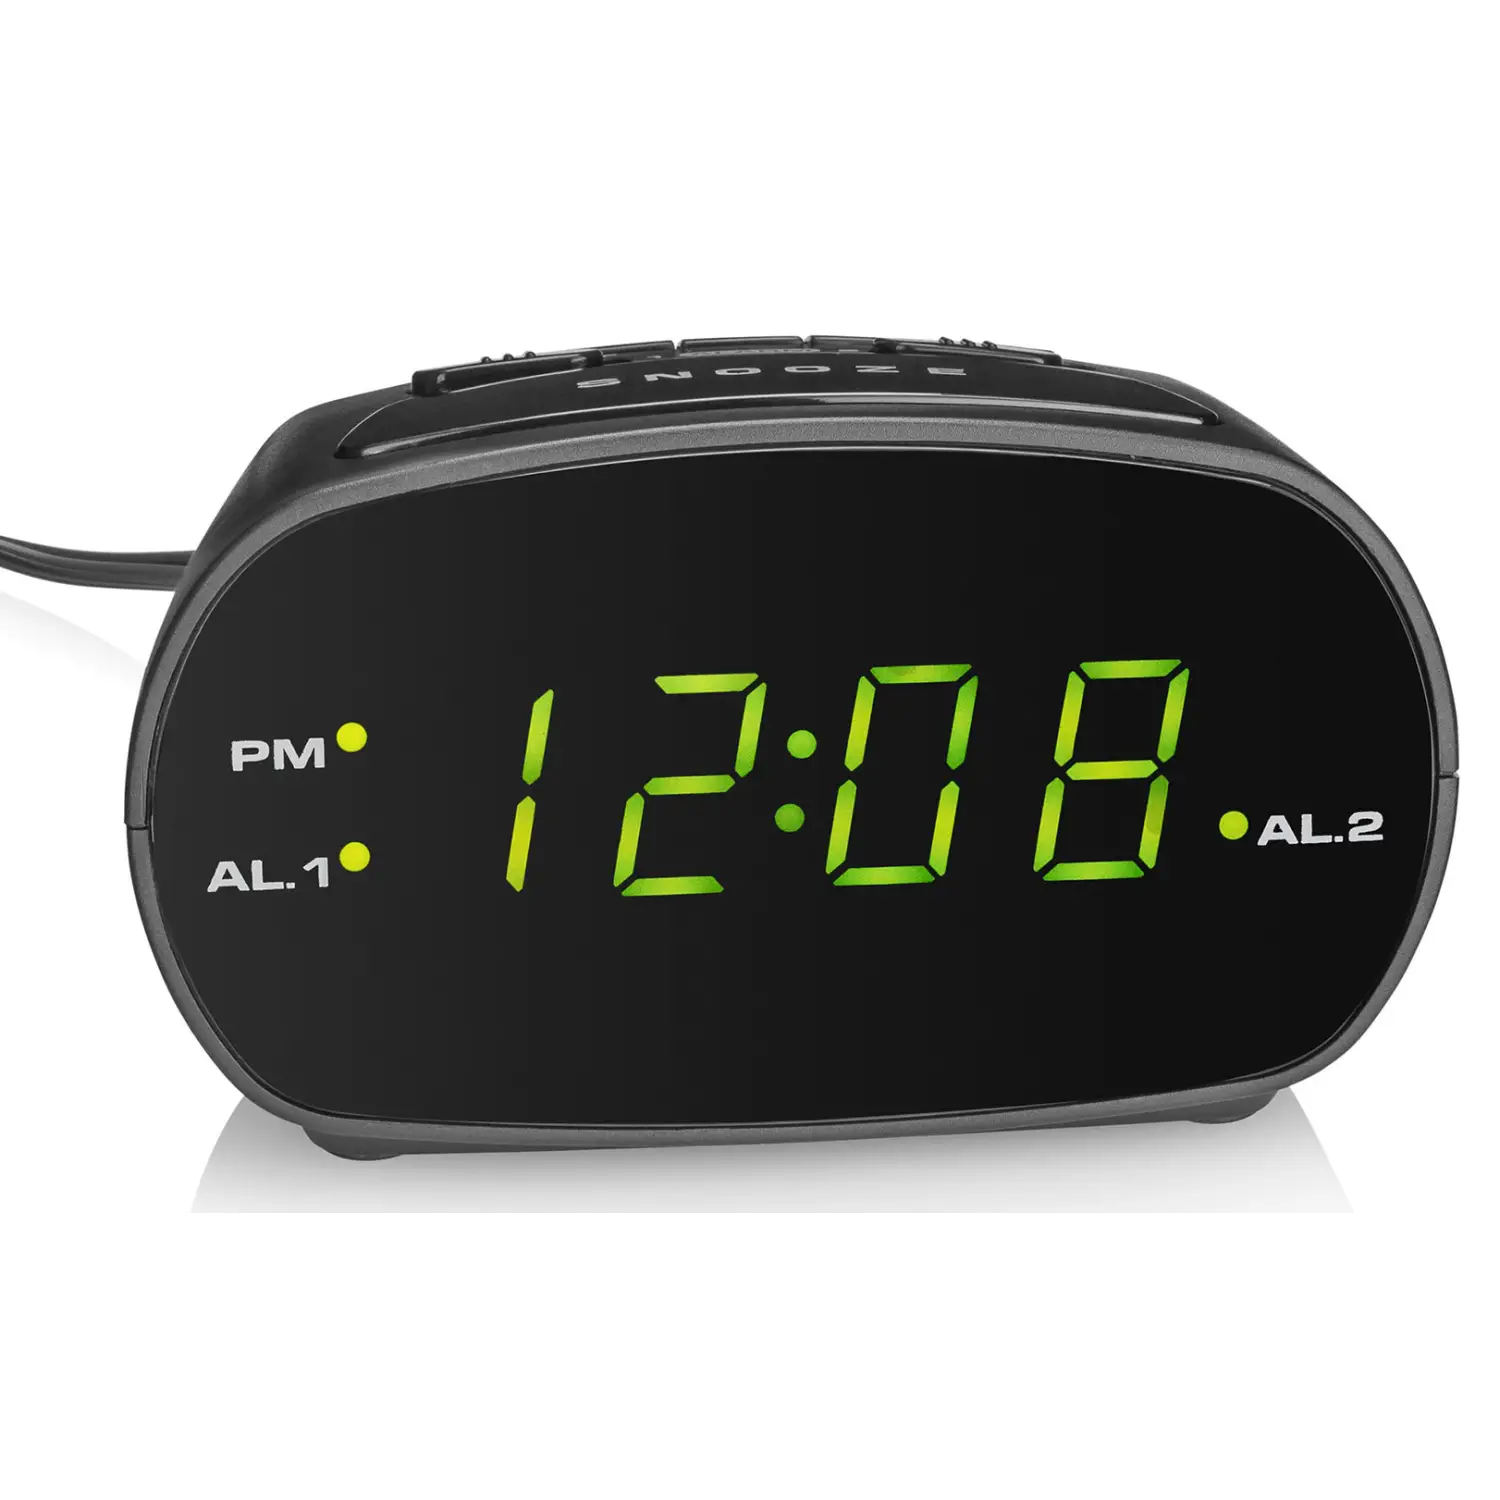 Mainstays Dual Alarm Snooze Electric Digital Alarm Clock